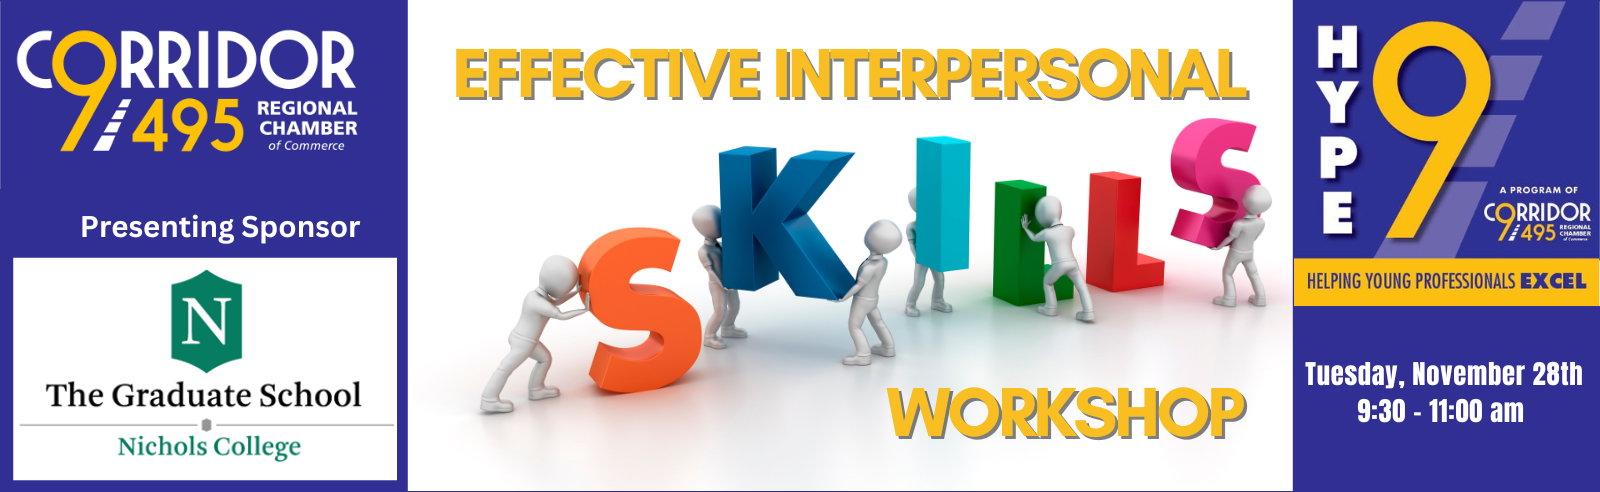 Interpersonal skills workshop Logo